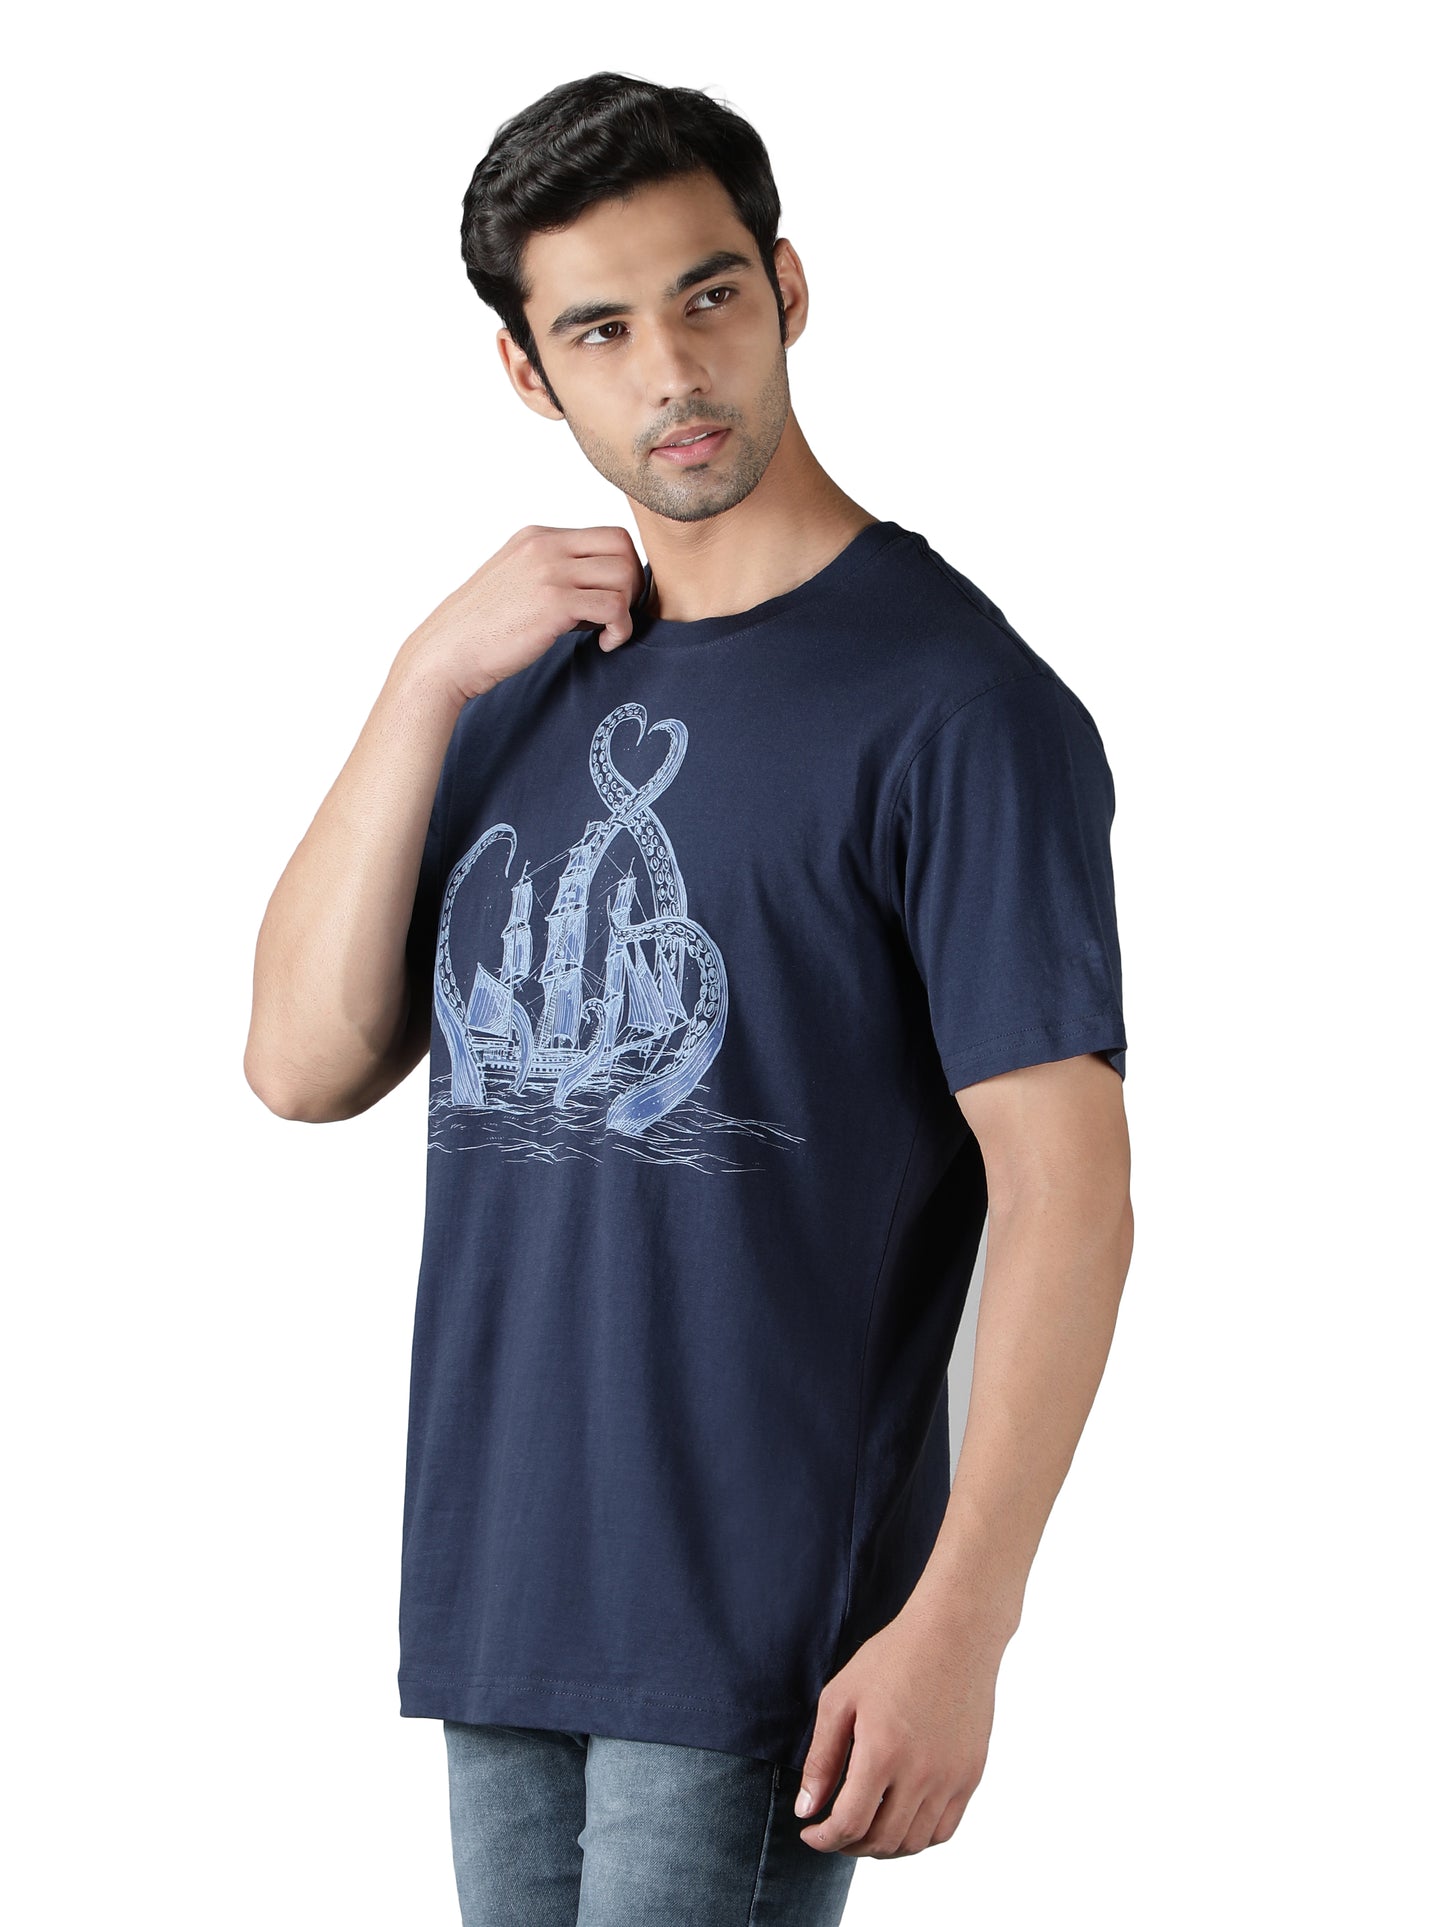 NUEVOSPORTA Men's Cotton Ship Printed Navy Blue T-Shirt